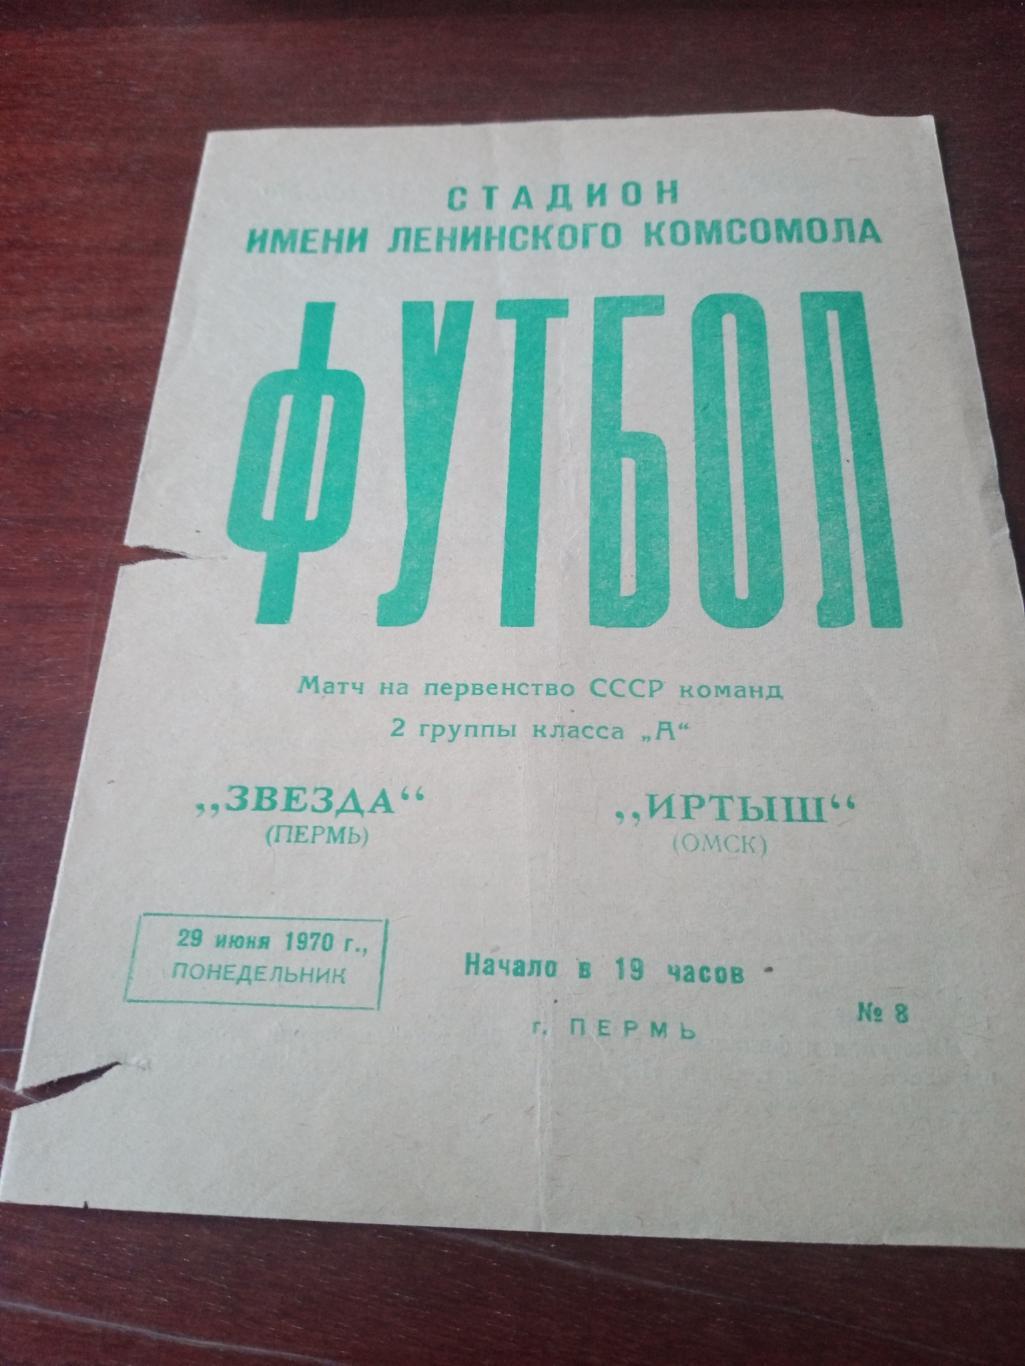 Звезда Пермь - Иртыш Омск. 29 июня 1970 год